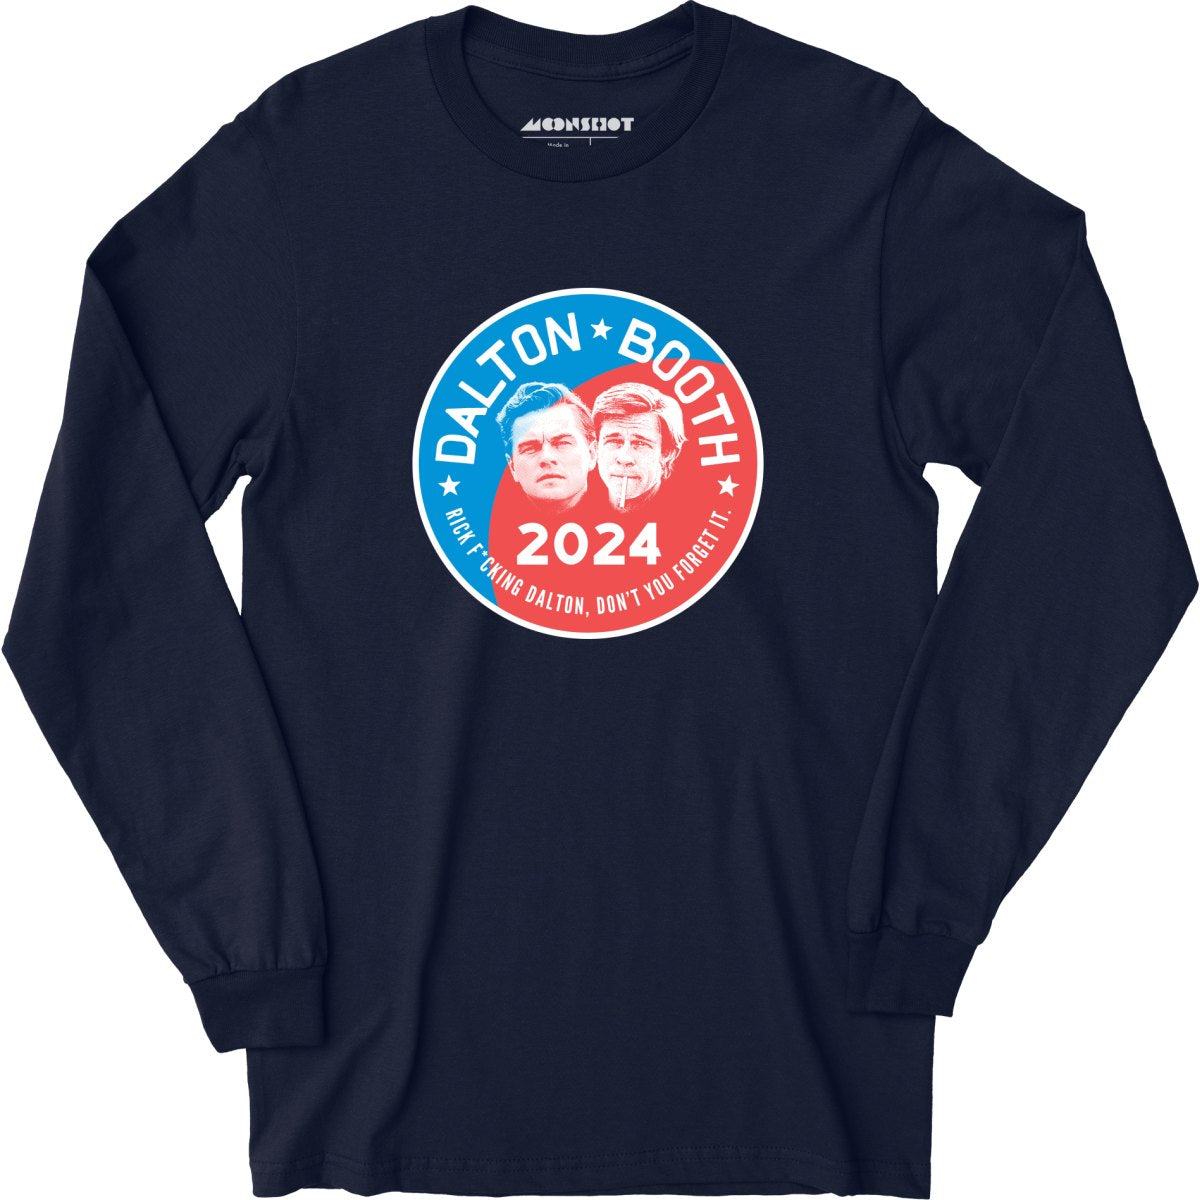 Dalton Booth 2024 - Long Sleeve T-Shirt